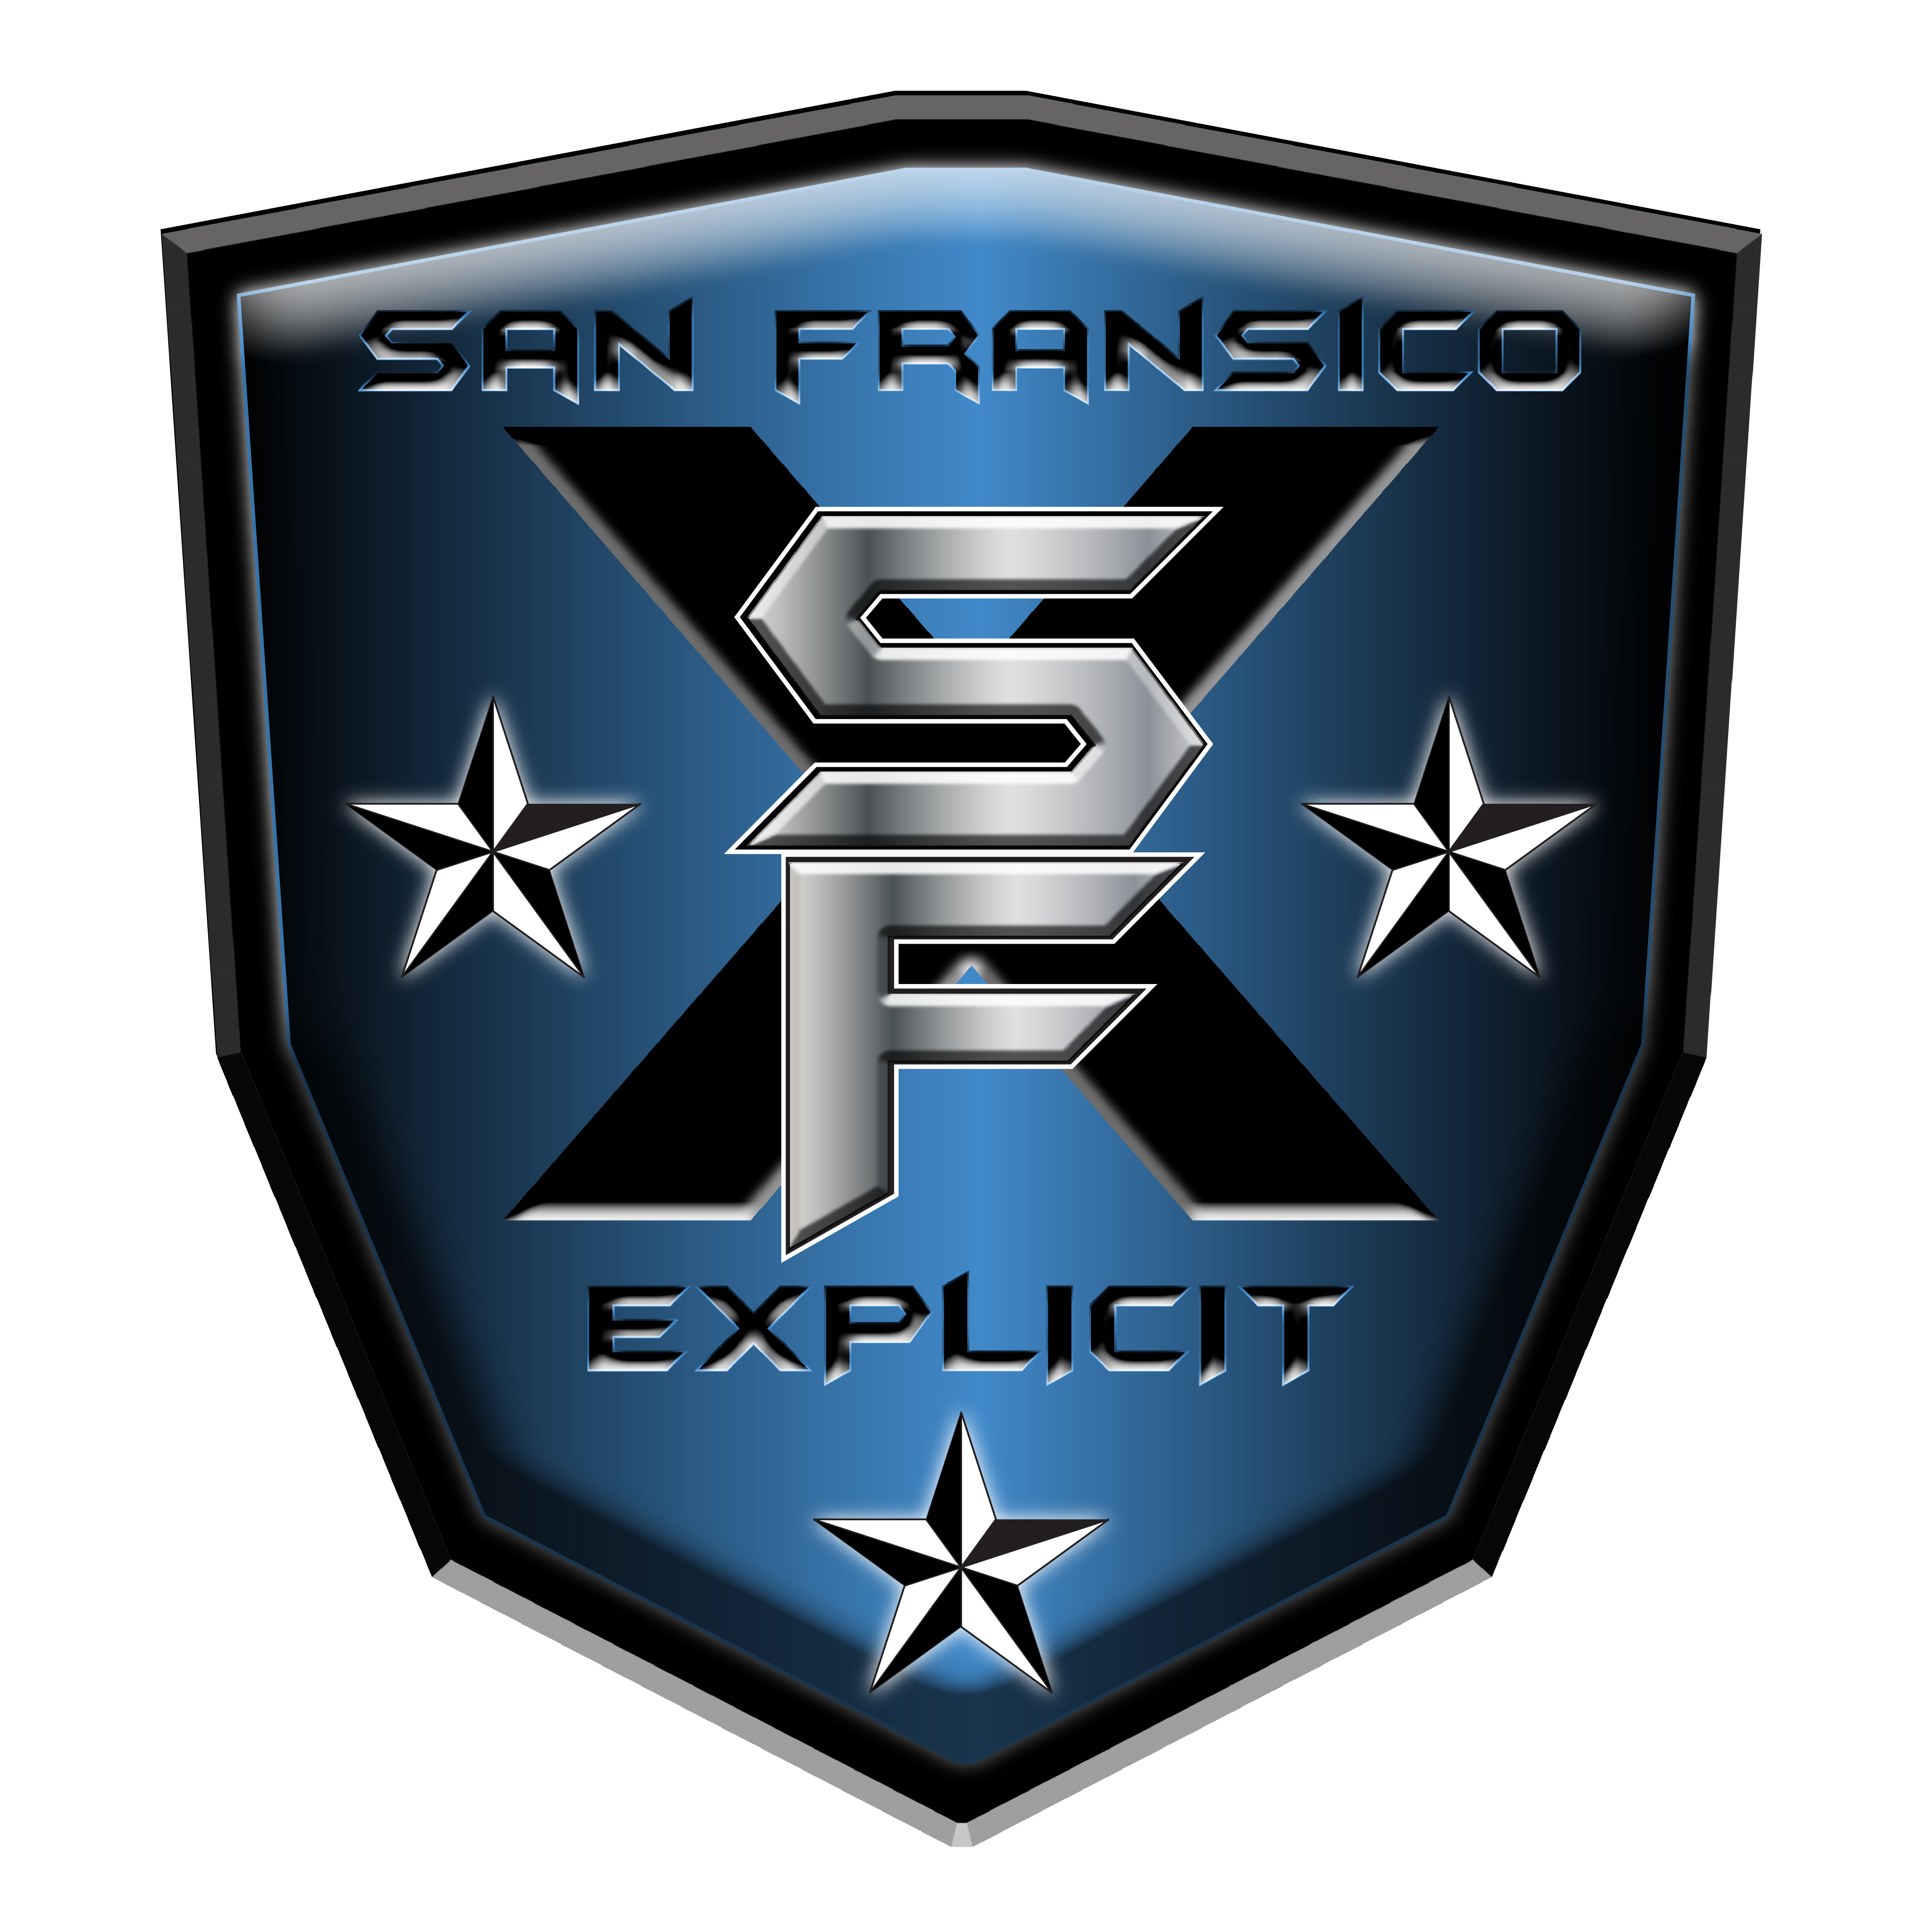 San Francisco Explicit to Shoot MacDev Clones for 2012